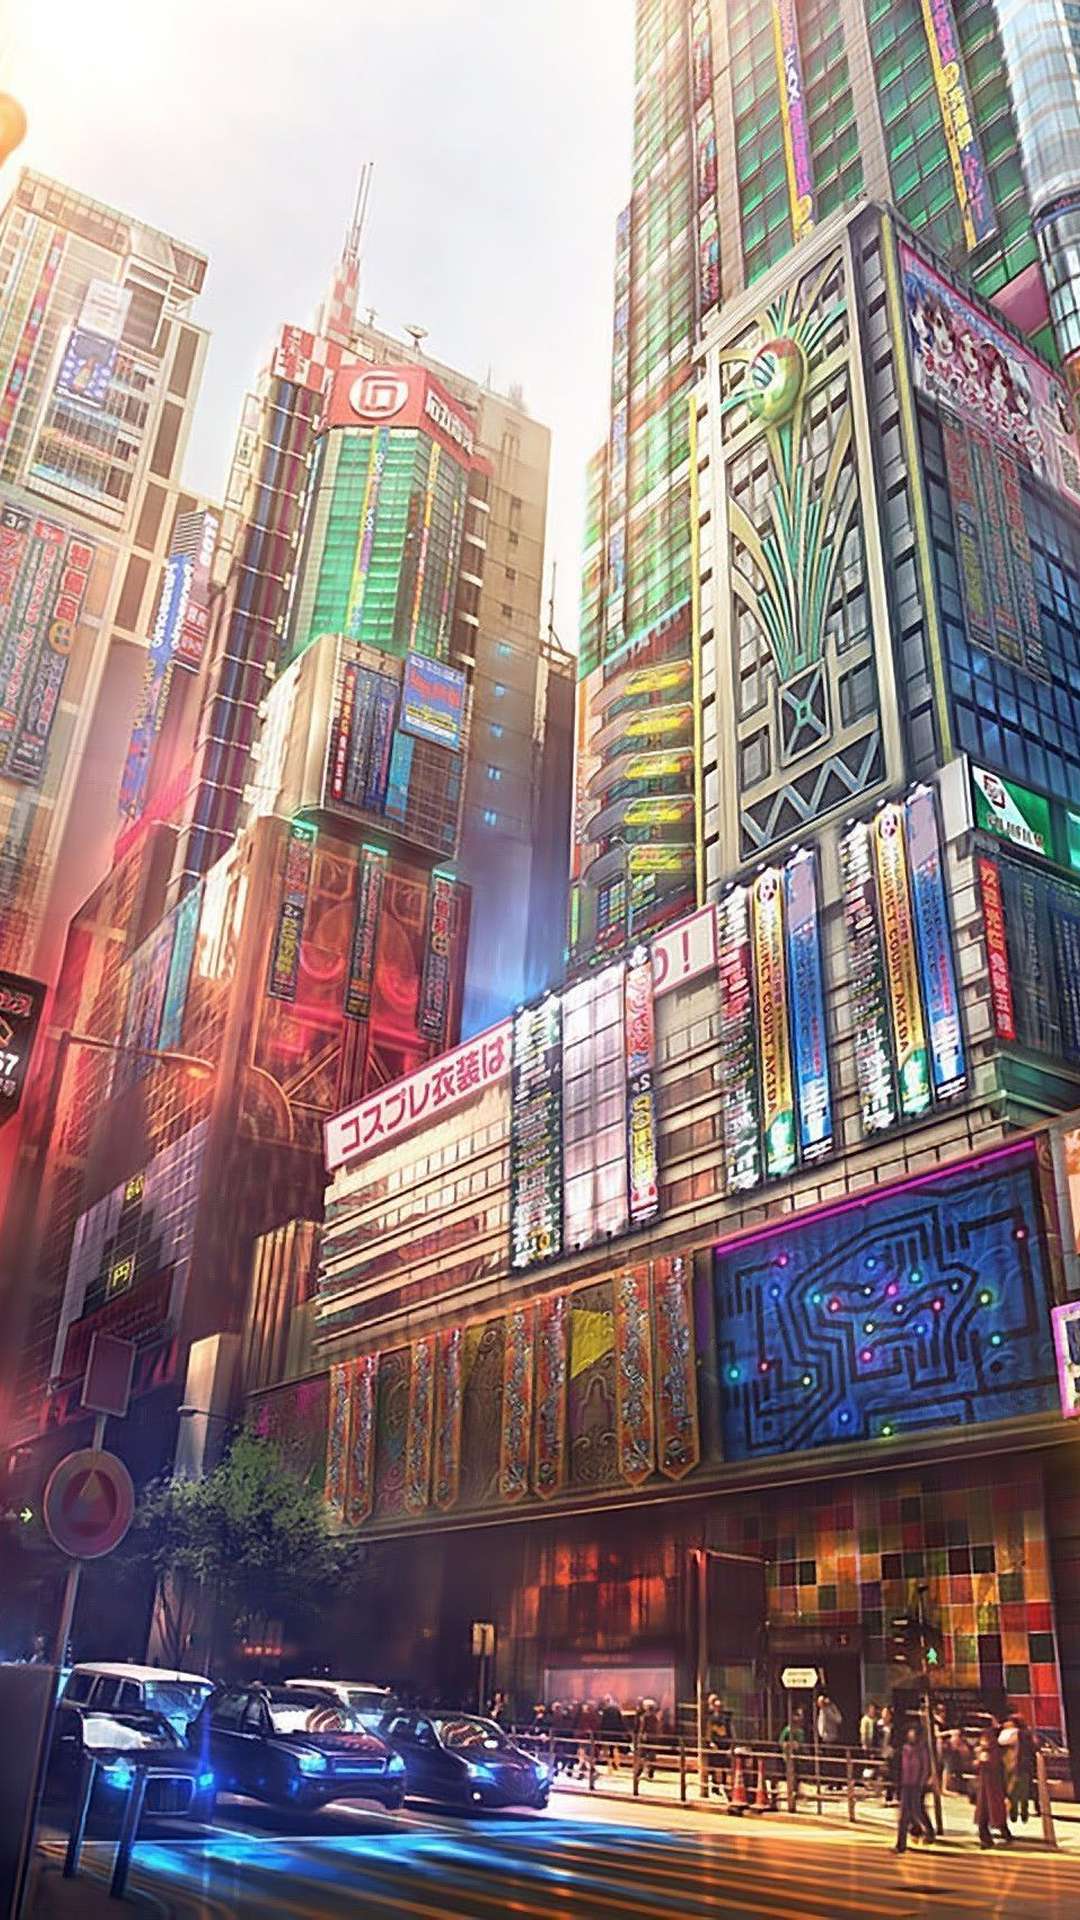 Anime City Backgrounds HD Free download  PixelsTalkNet